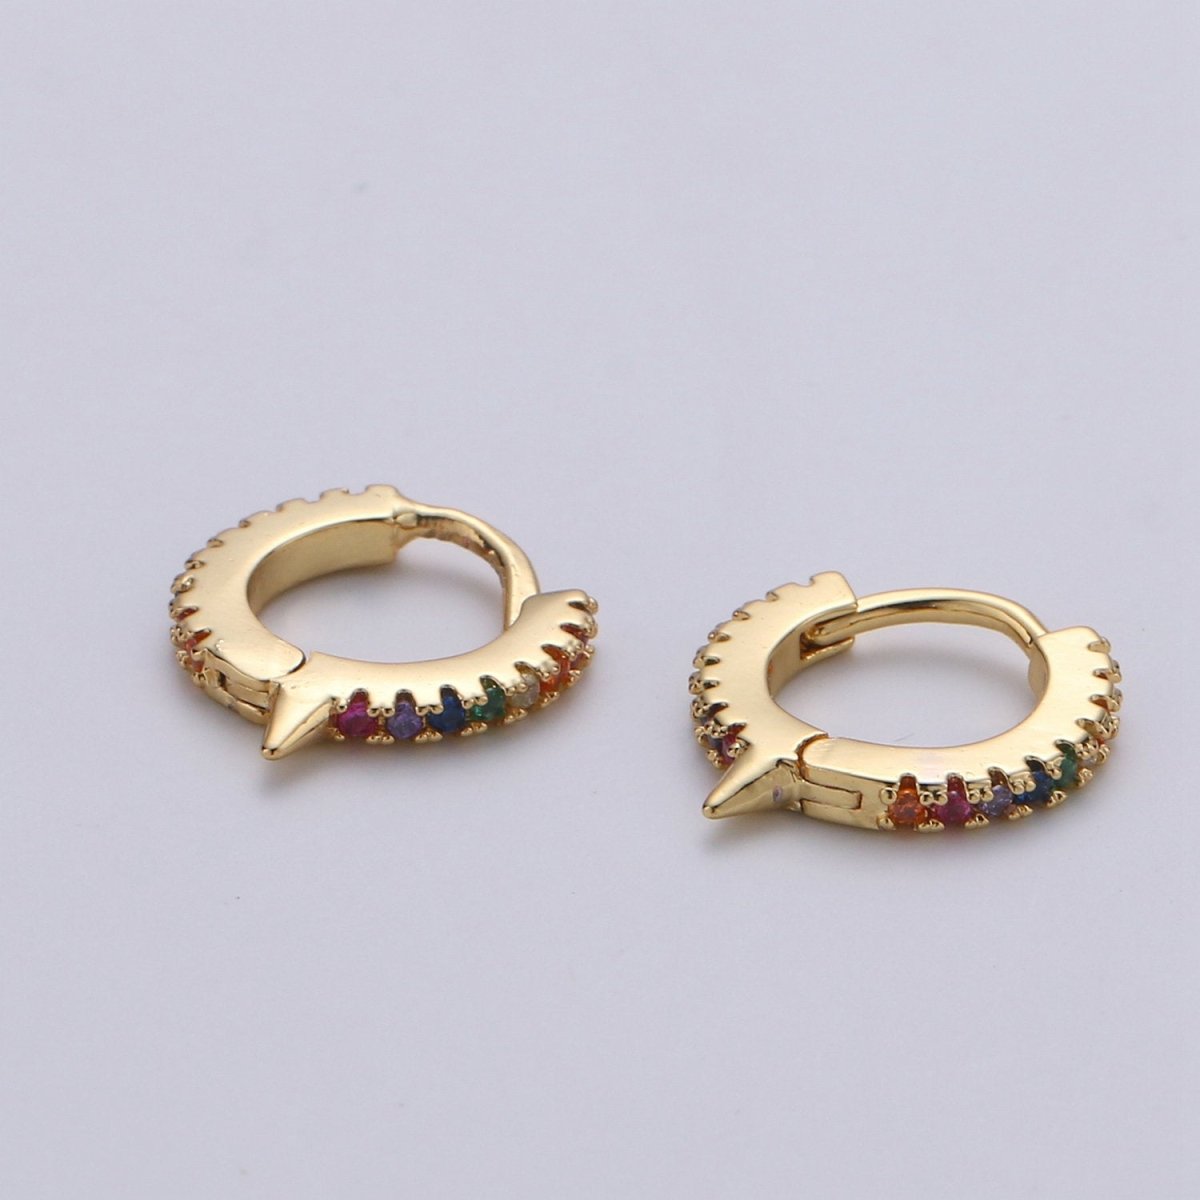 Spike Gold hoop earrings - huggie hoops earrings - Dainty hoops Earring - Tiny hoops Thin hoops Minimalist Jewelry Micro Pave Earring K-643 K-644 - DLUXCA